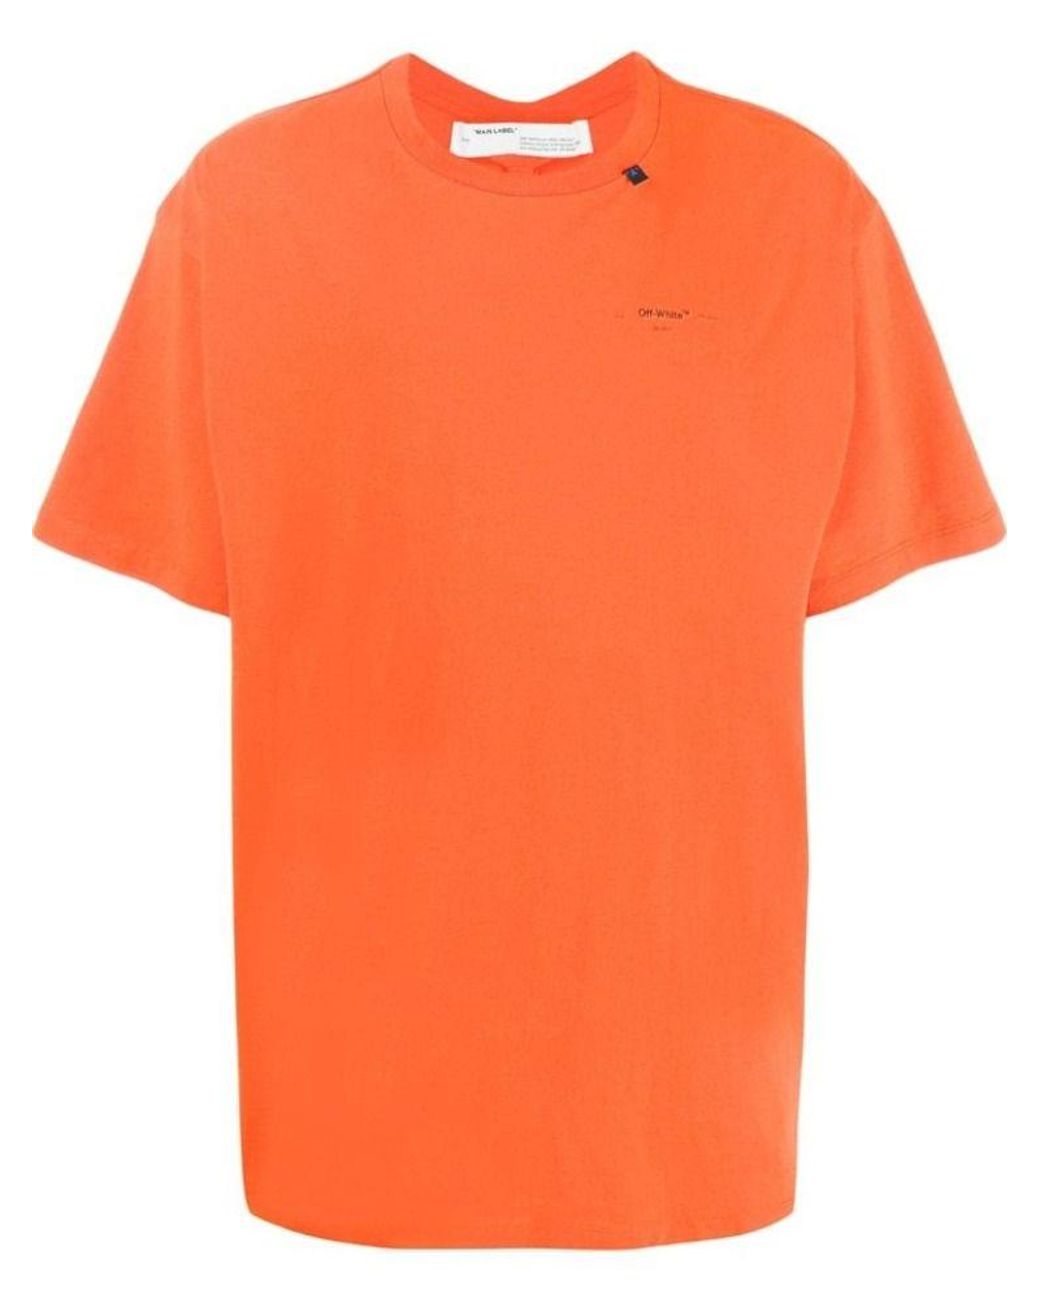 Off-White c/o Virgil Abloh Orange Cotton T-shirt for Men - Lyst